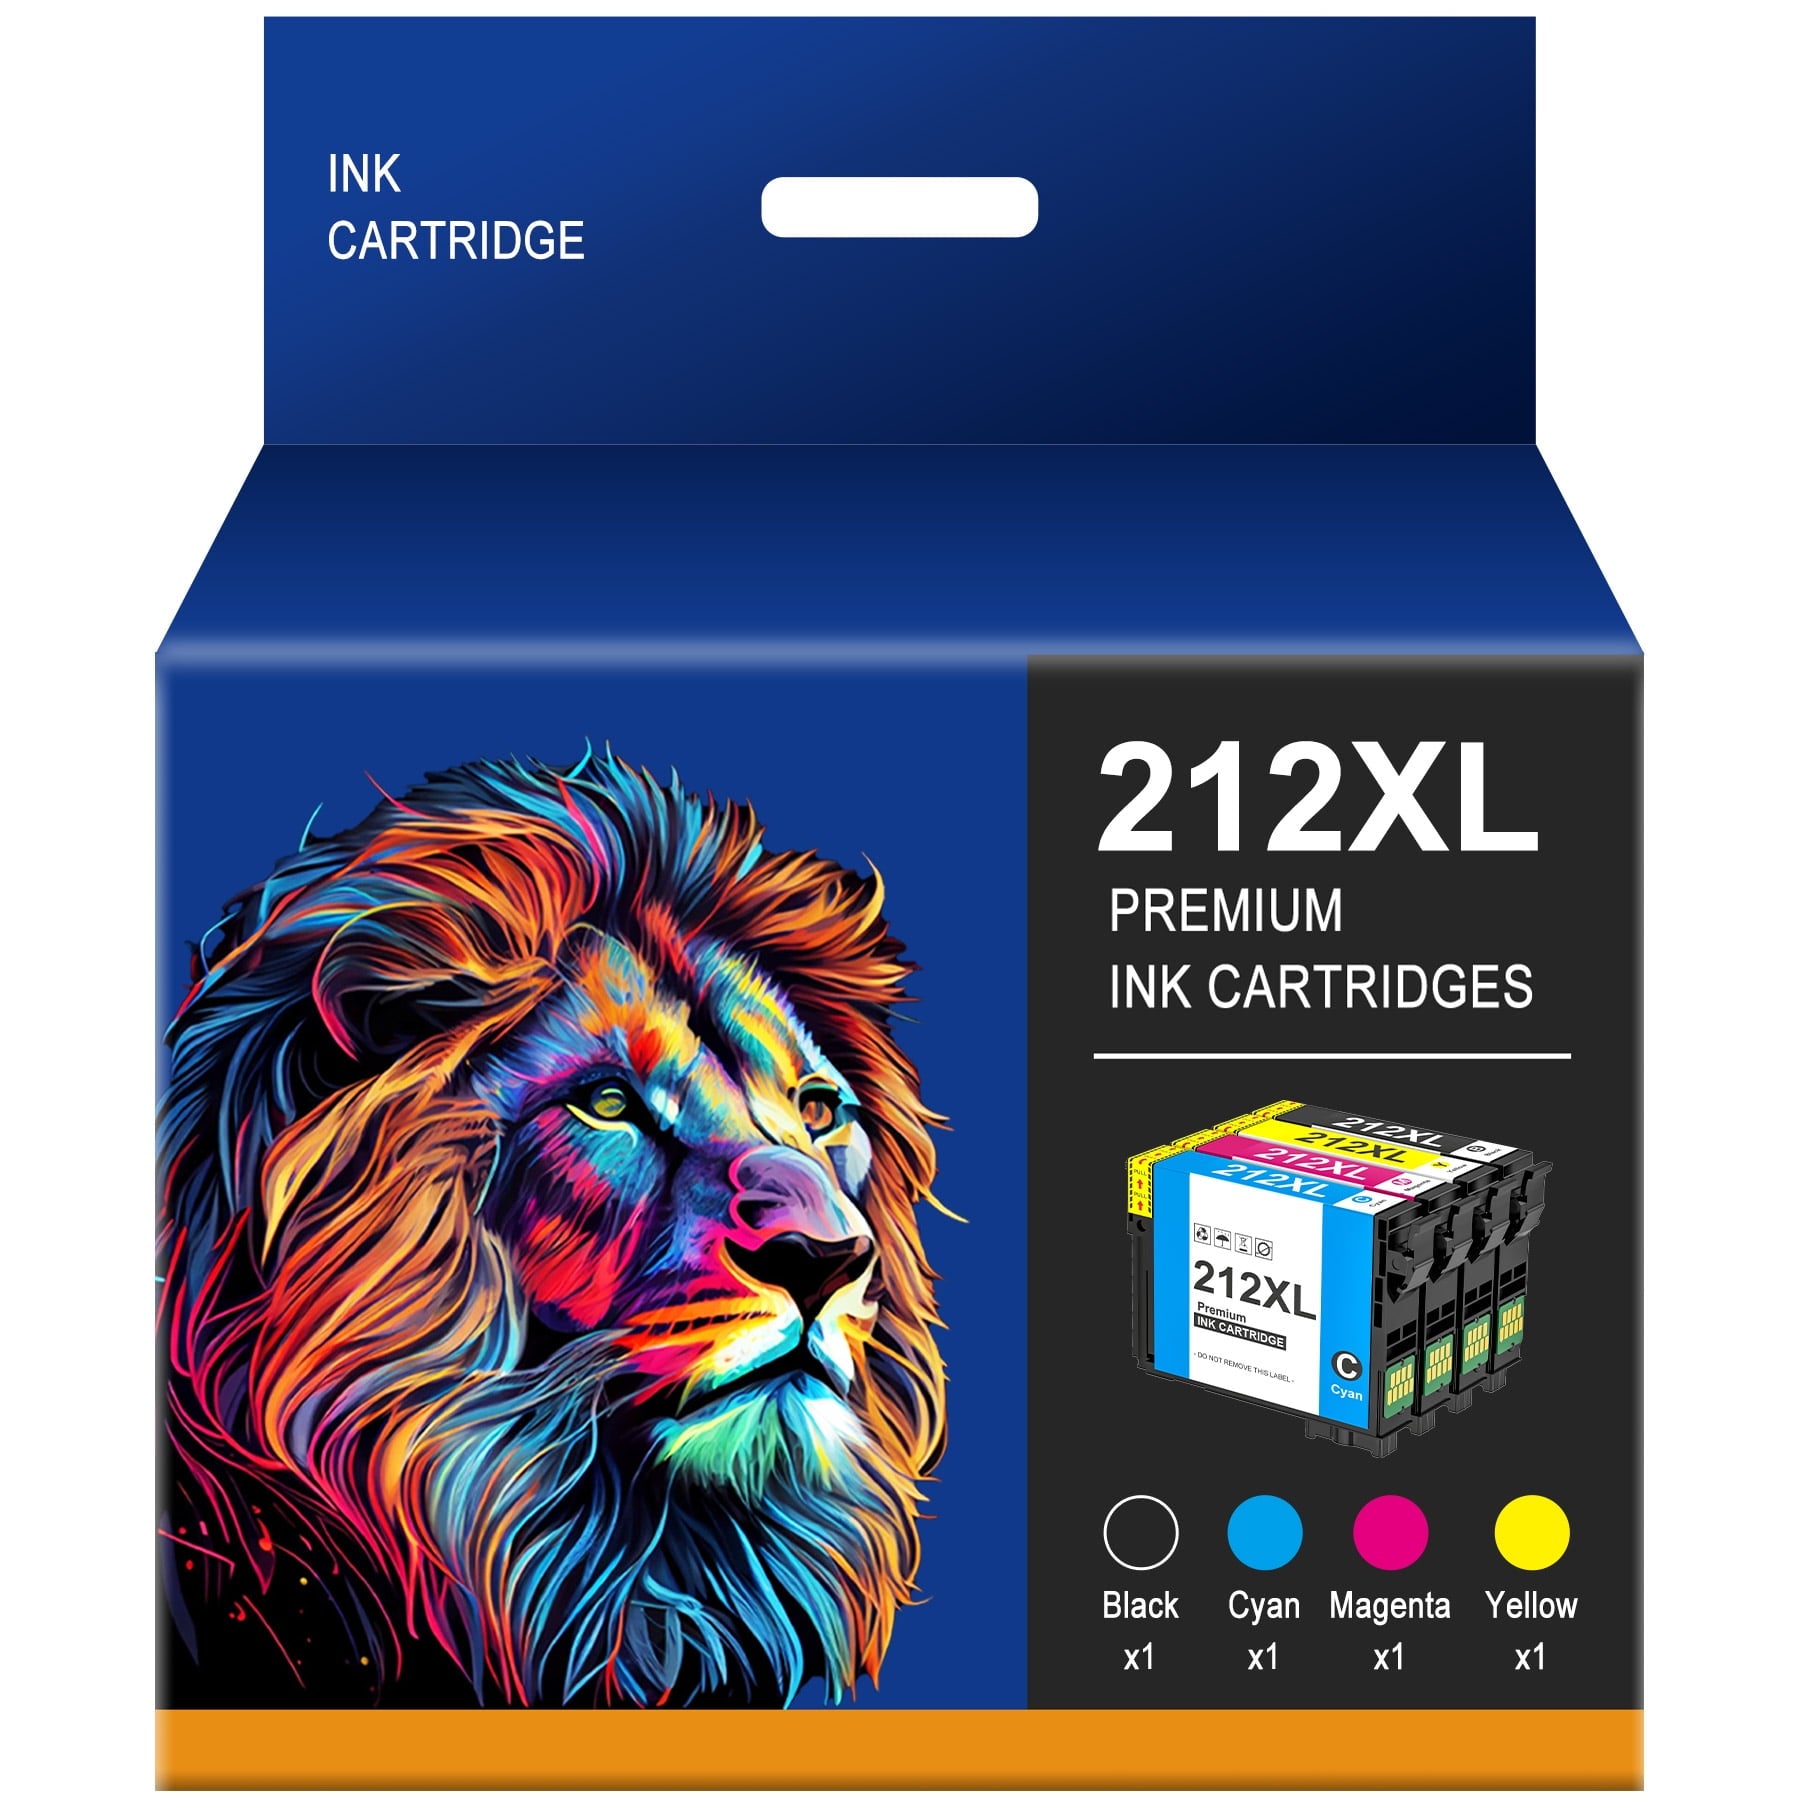 212XL 212 Ink Cartridges for Epson printers(4-Pack, Black Cyan Magenta Yellow)